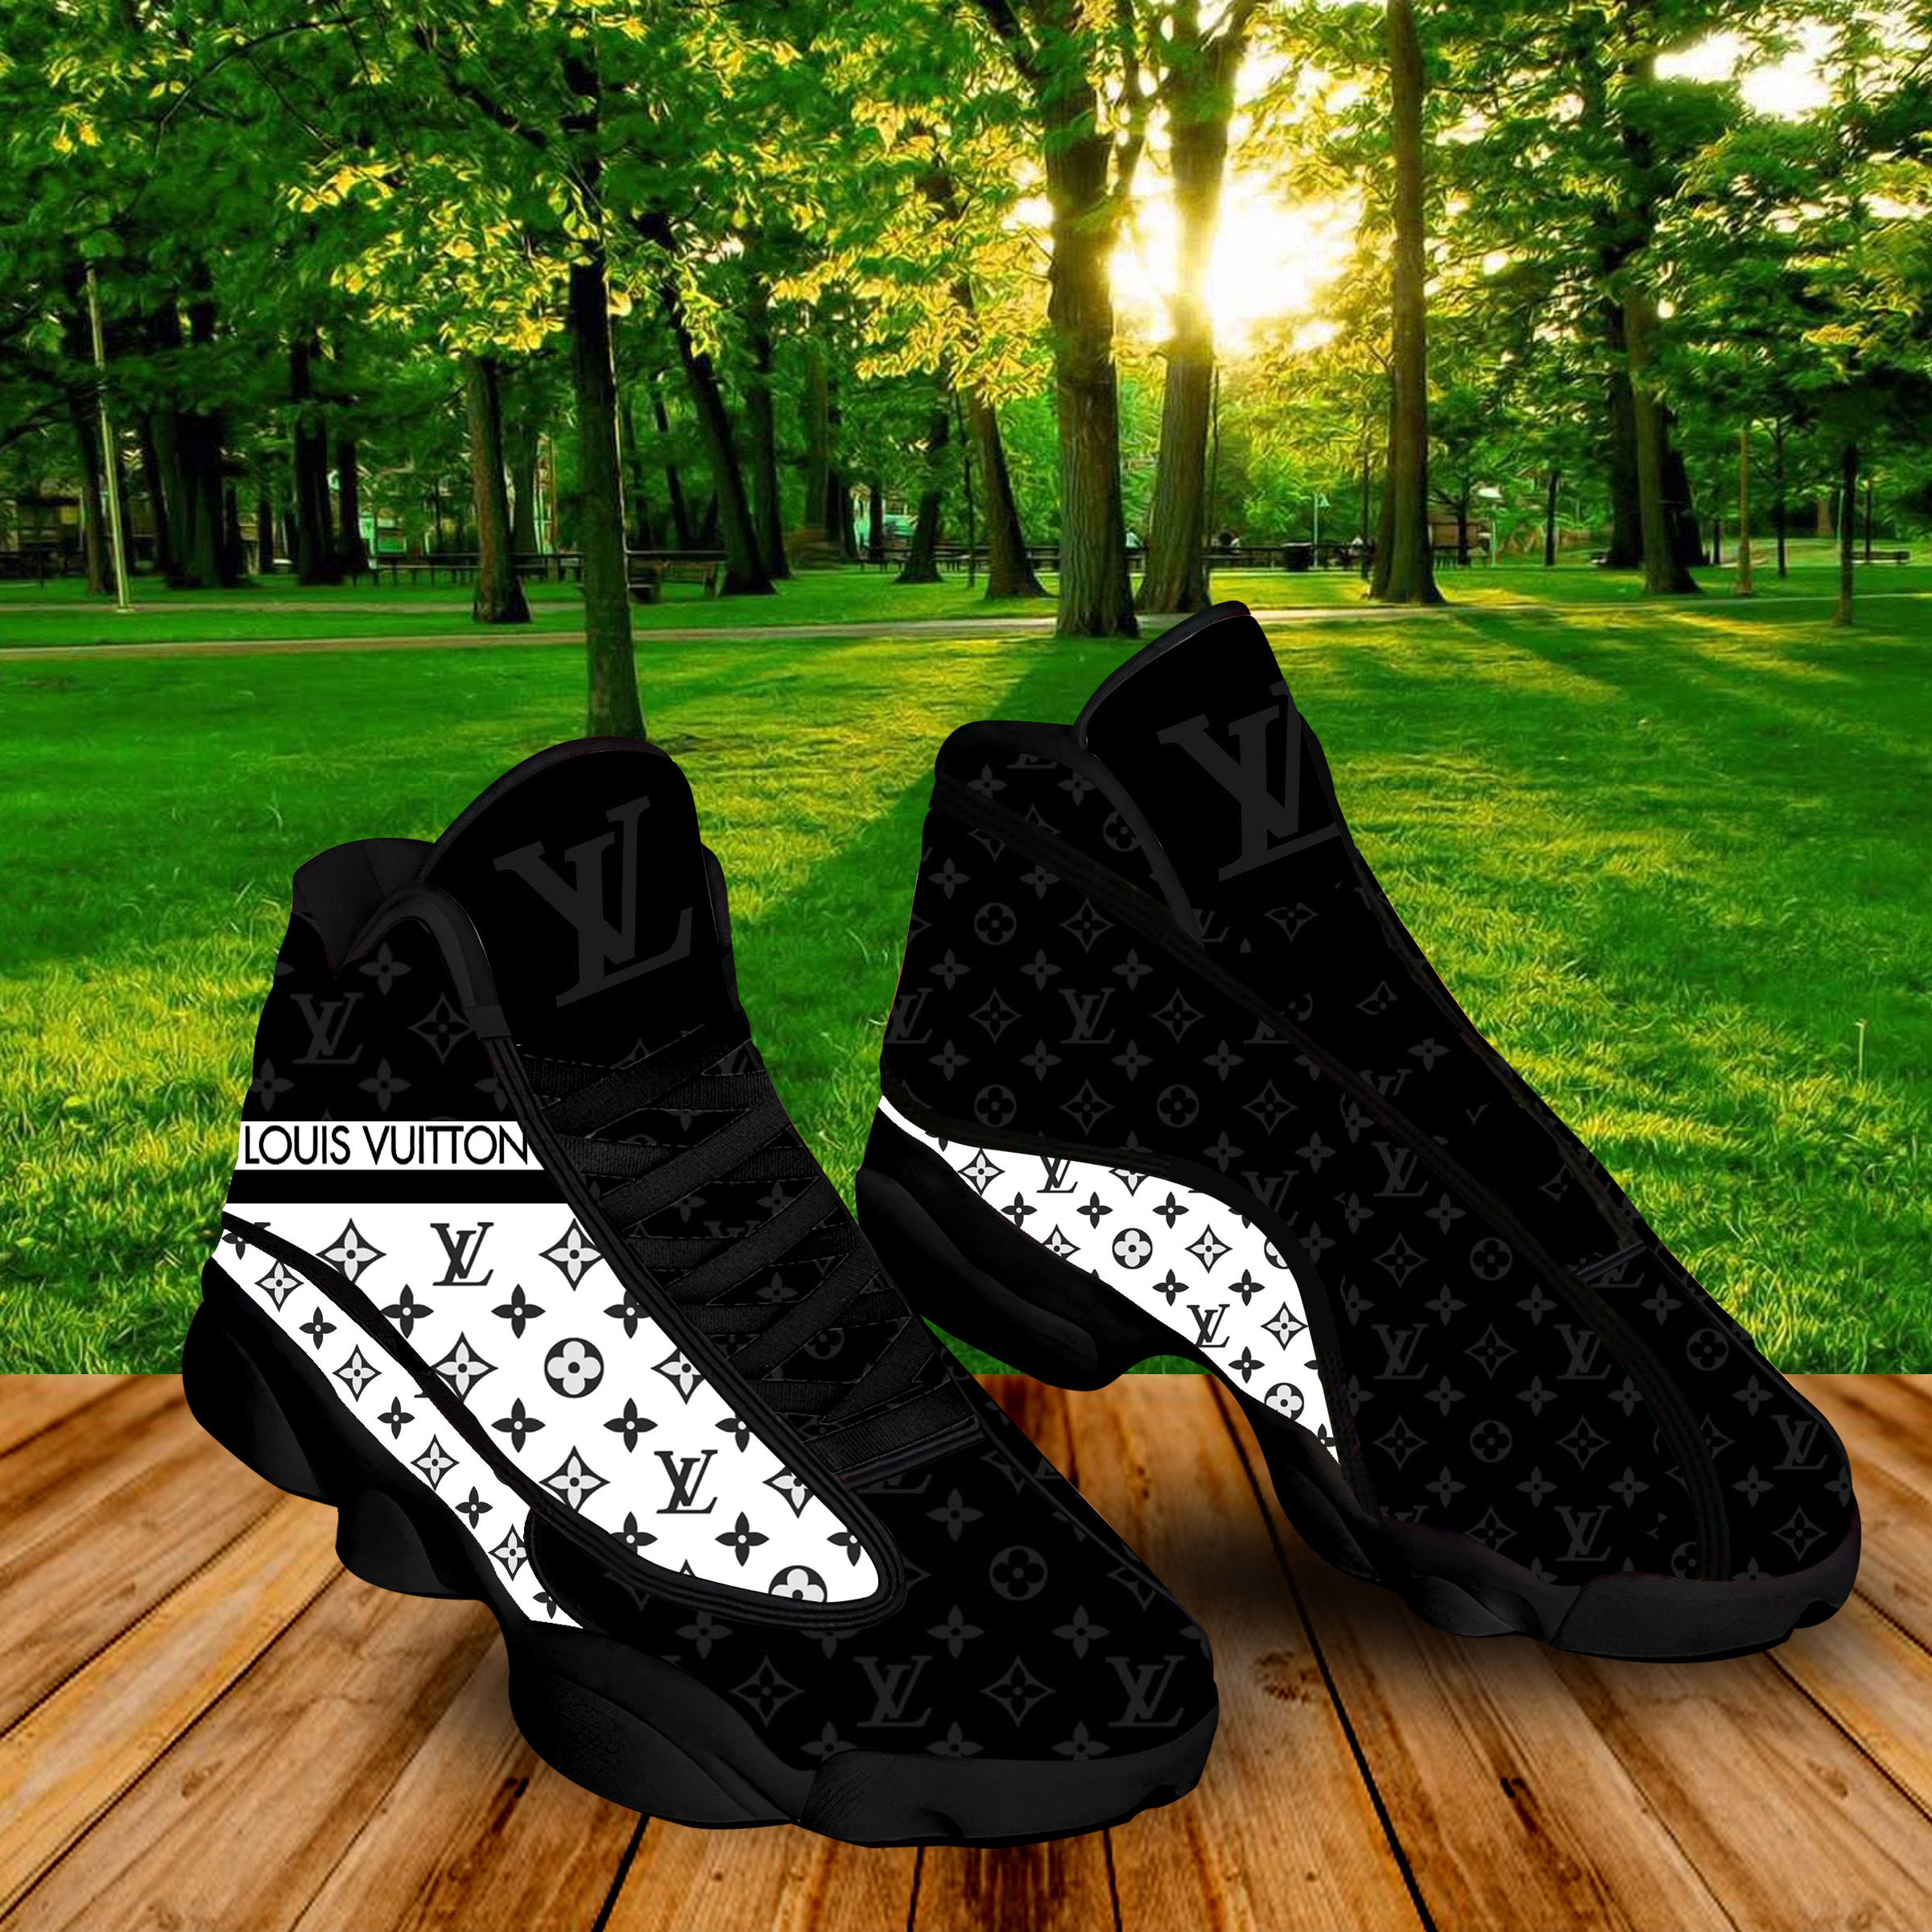 Louis Vuitton Black White Air Jordan 13 Trending Fashion Sneakers Shoes Luxury